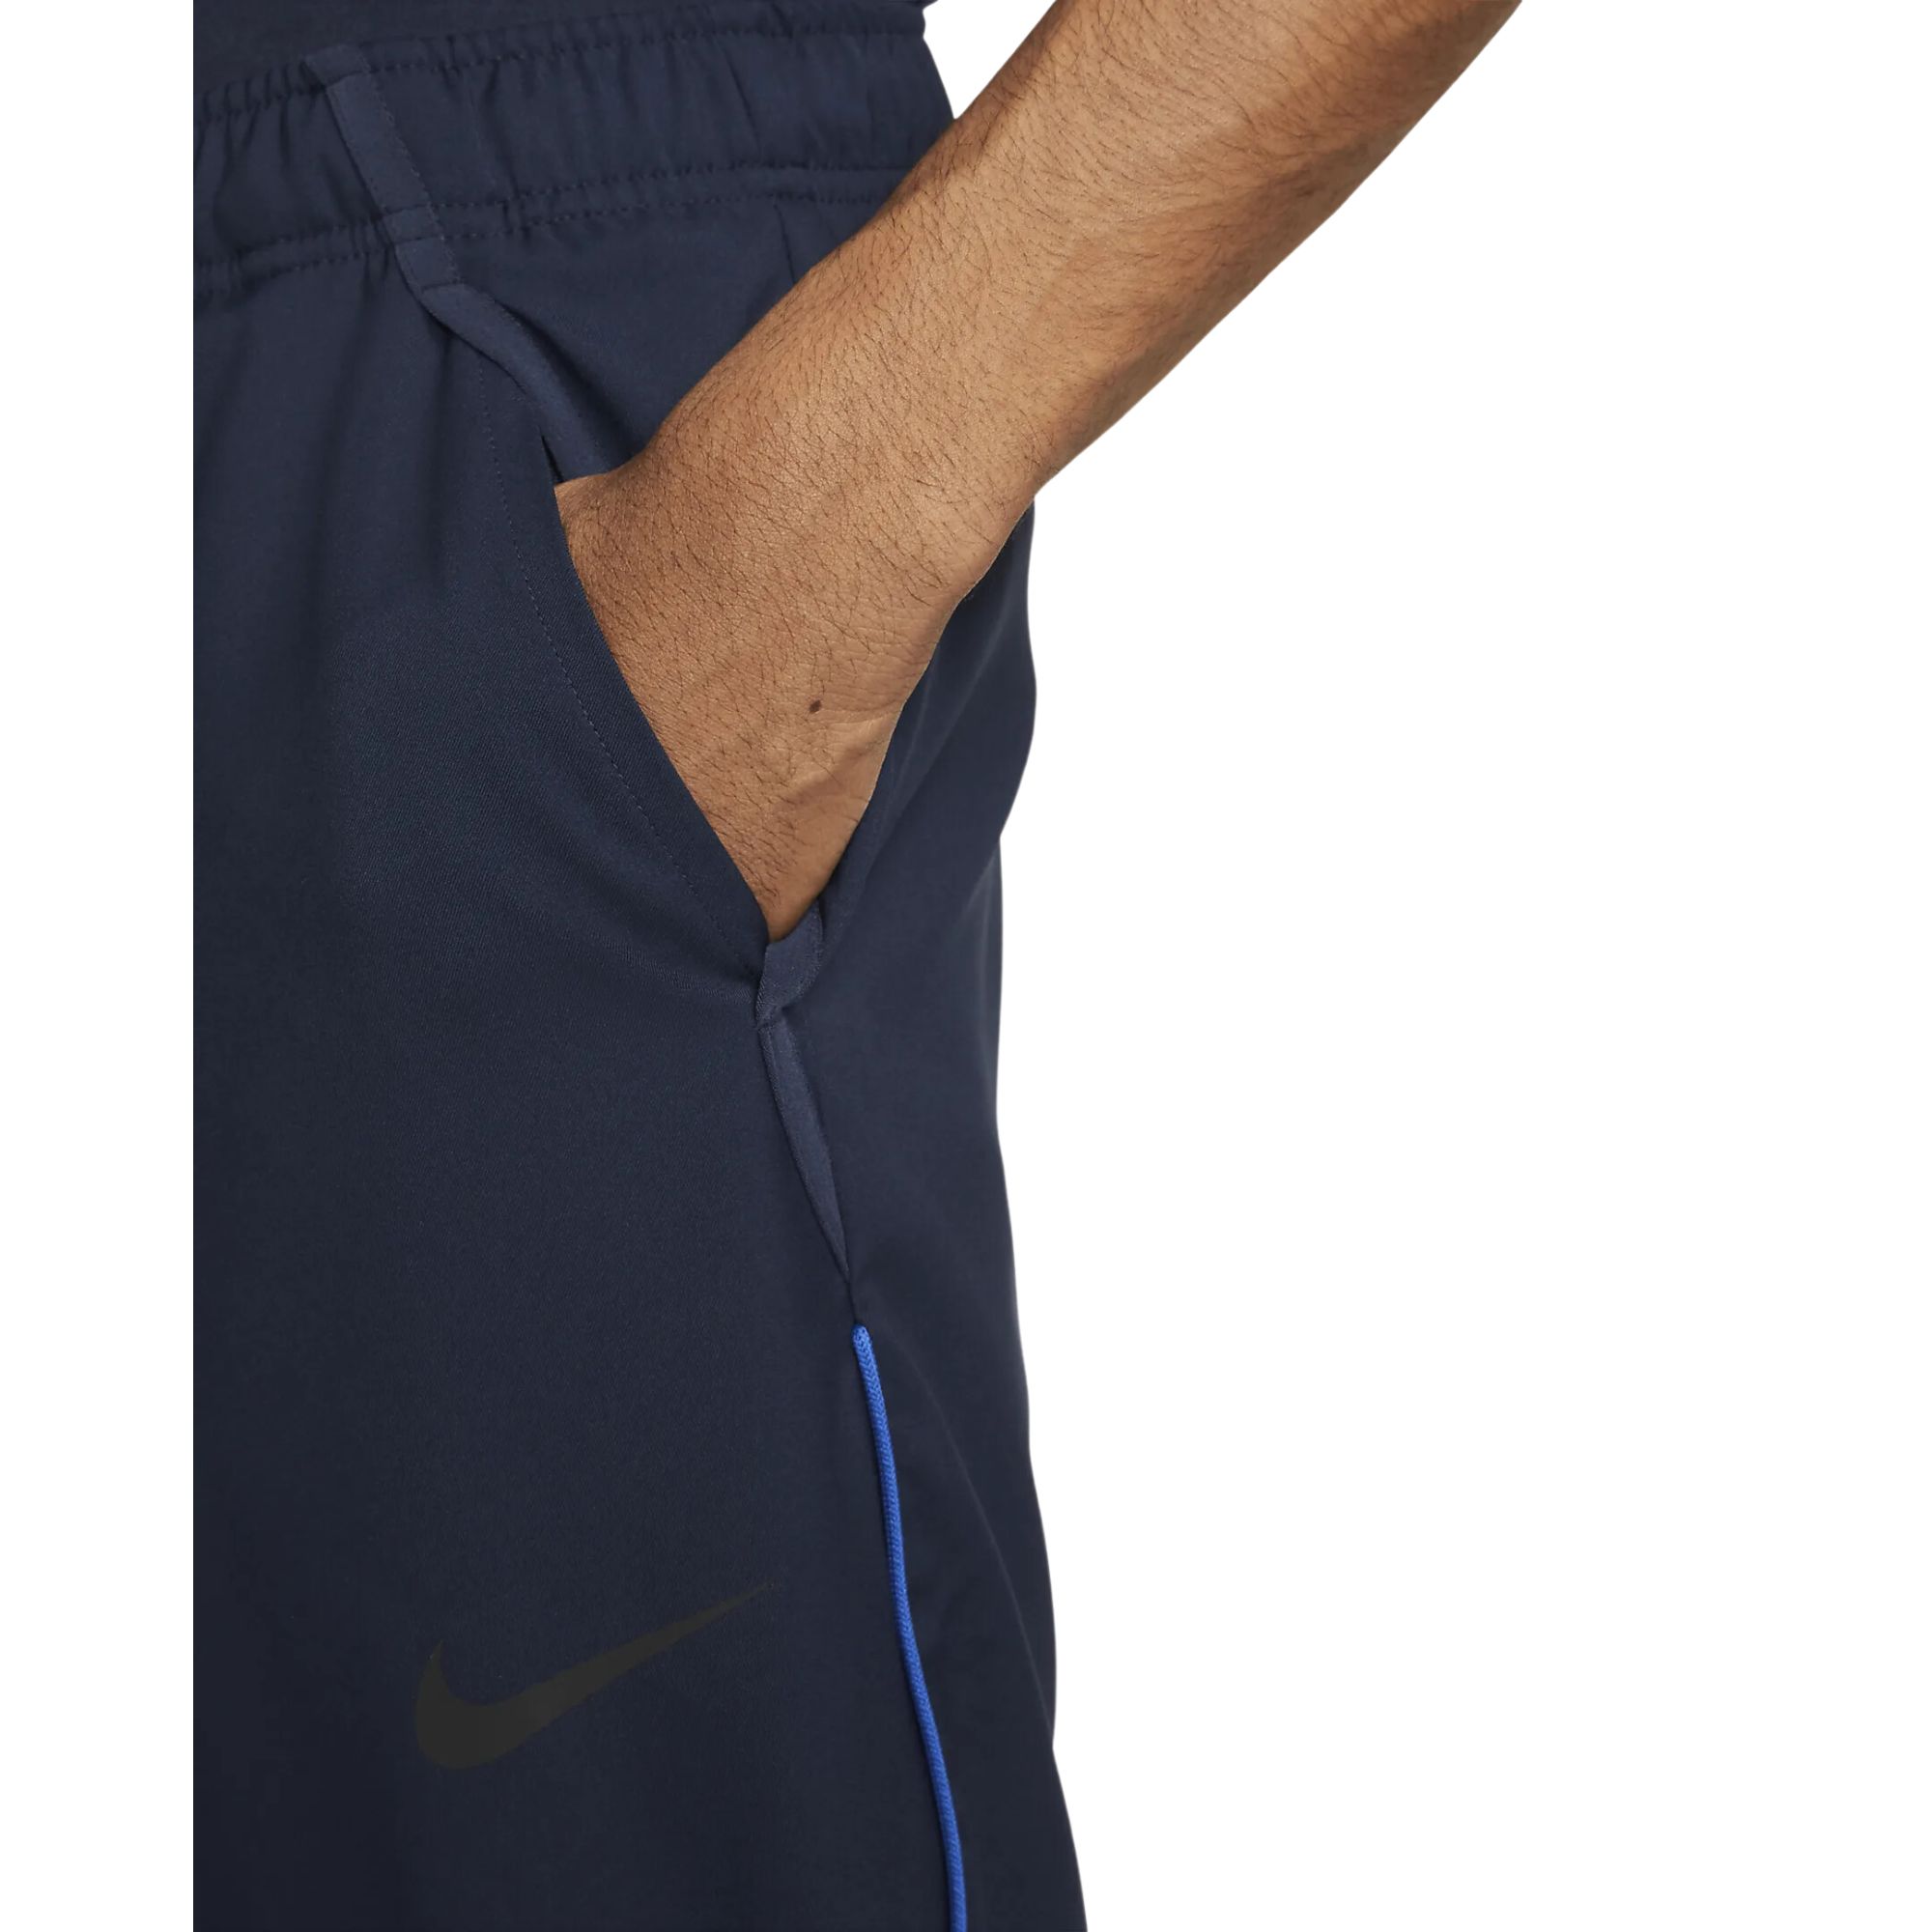 Calça Masculina Nike Dri-Fit Pant Epic Knit em Promoção